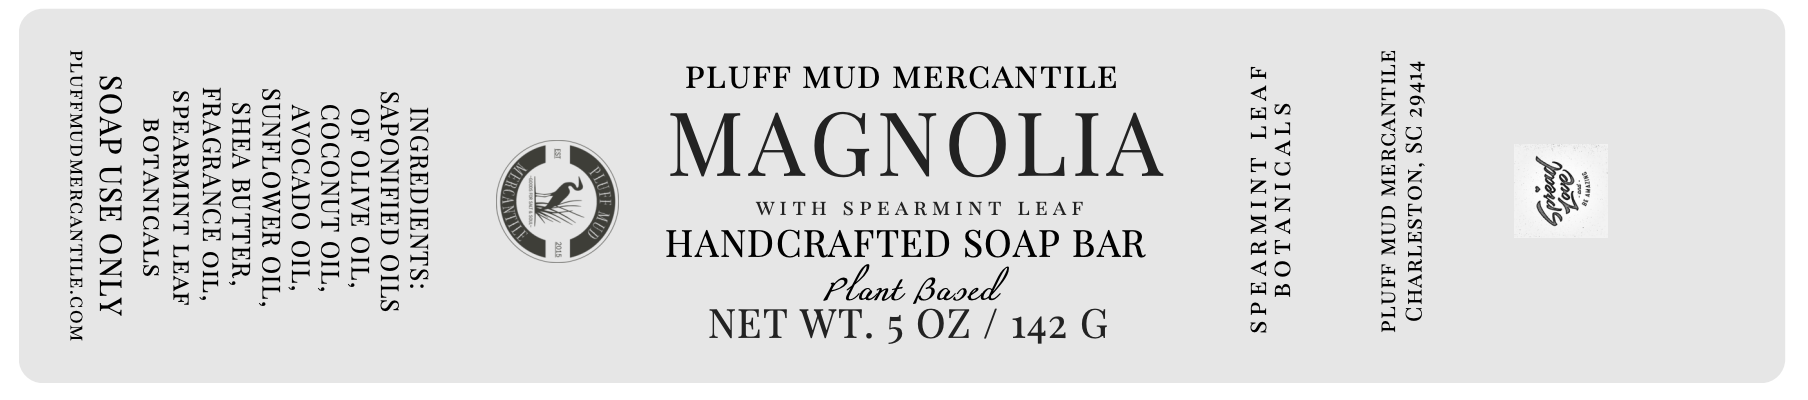 5 oz Magnolia Handcrafted Soap